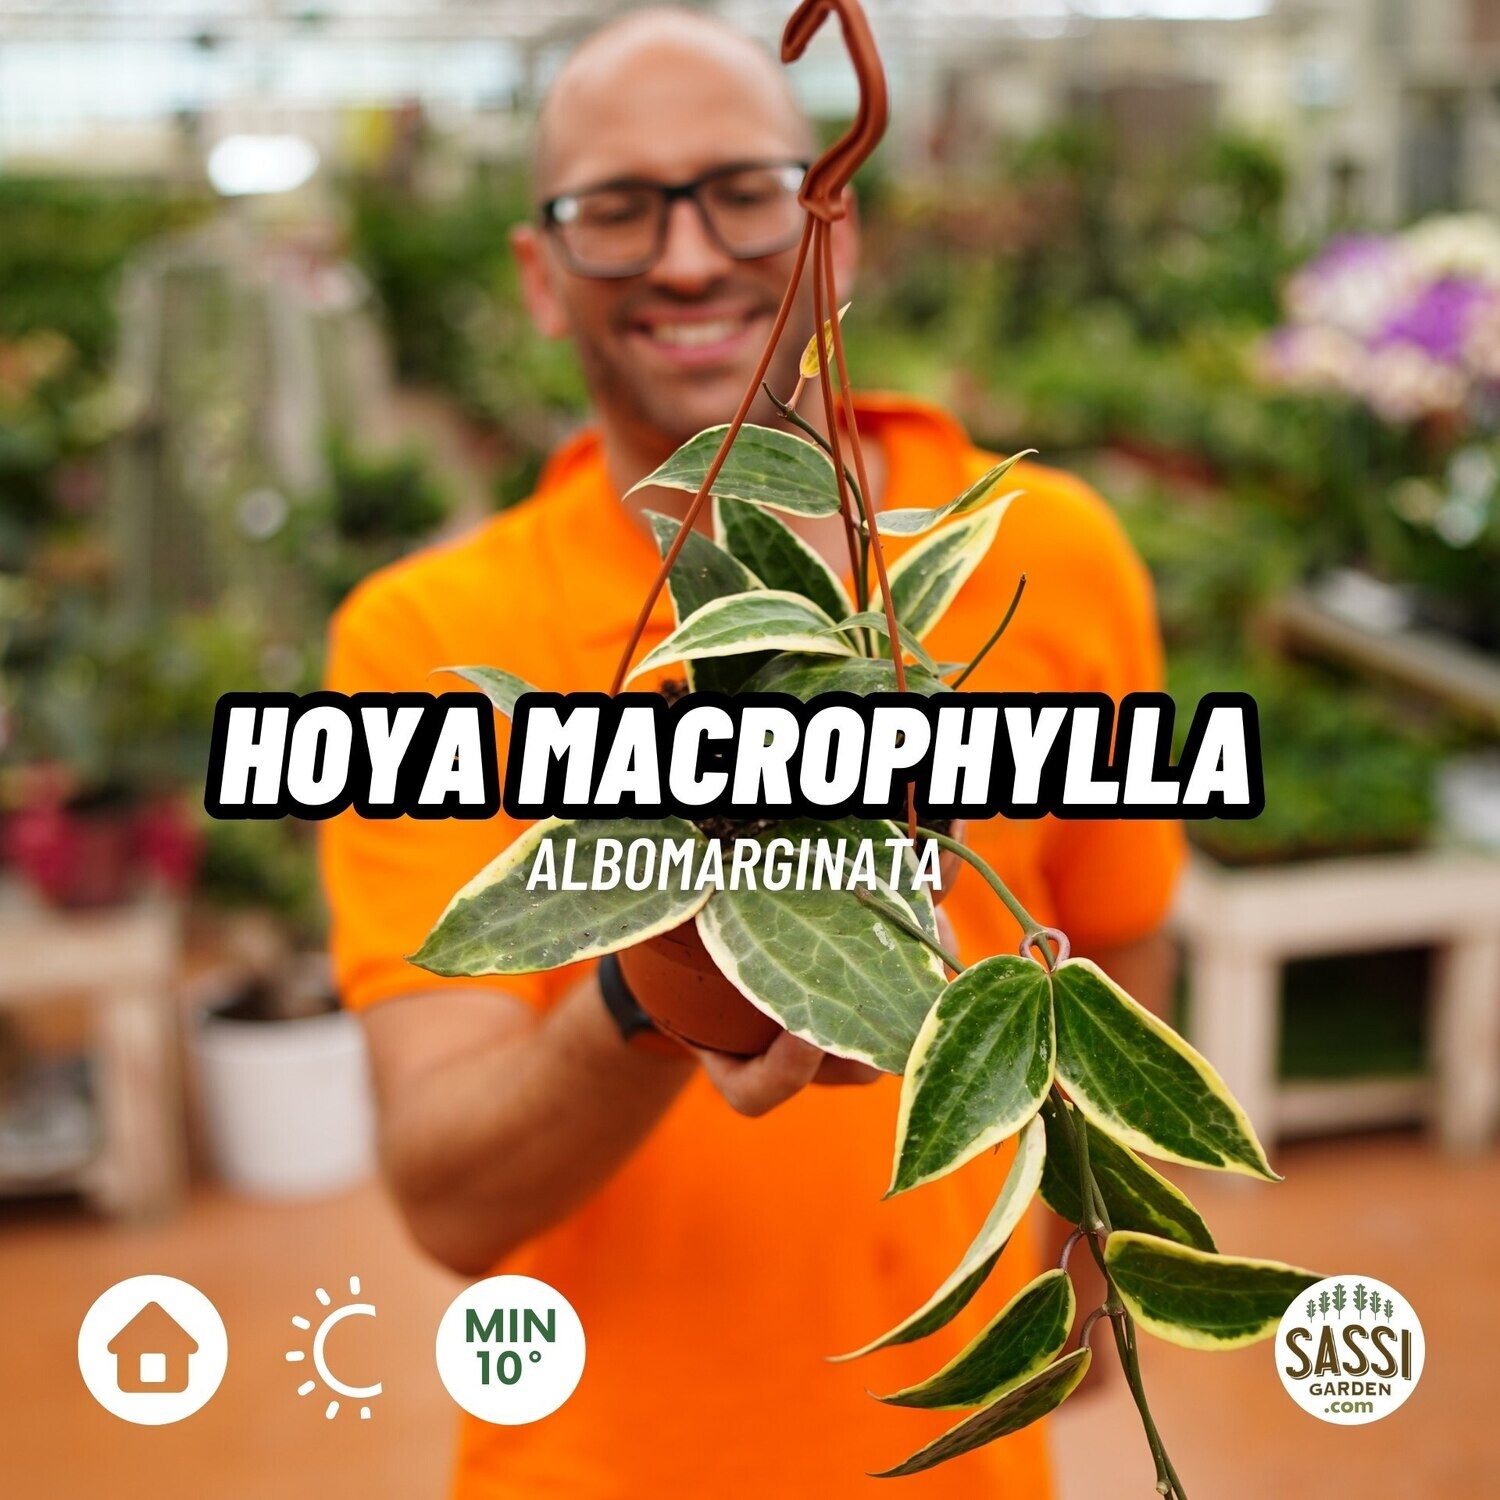 Hoya macrophylla albomarginata - vaso Ø14 cm